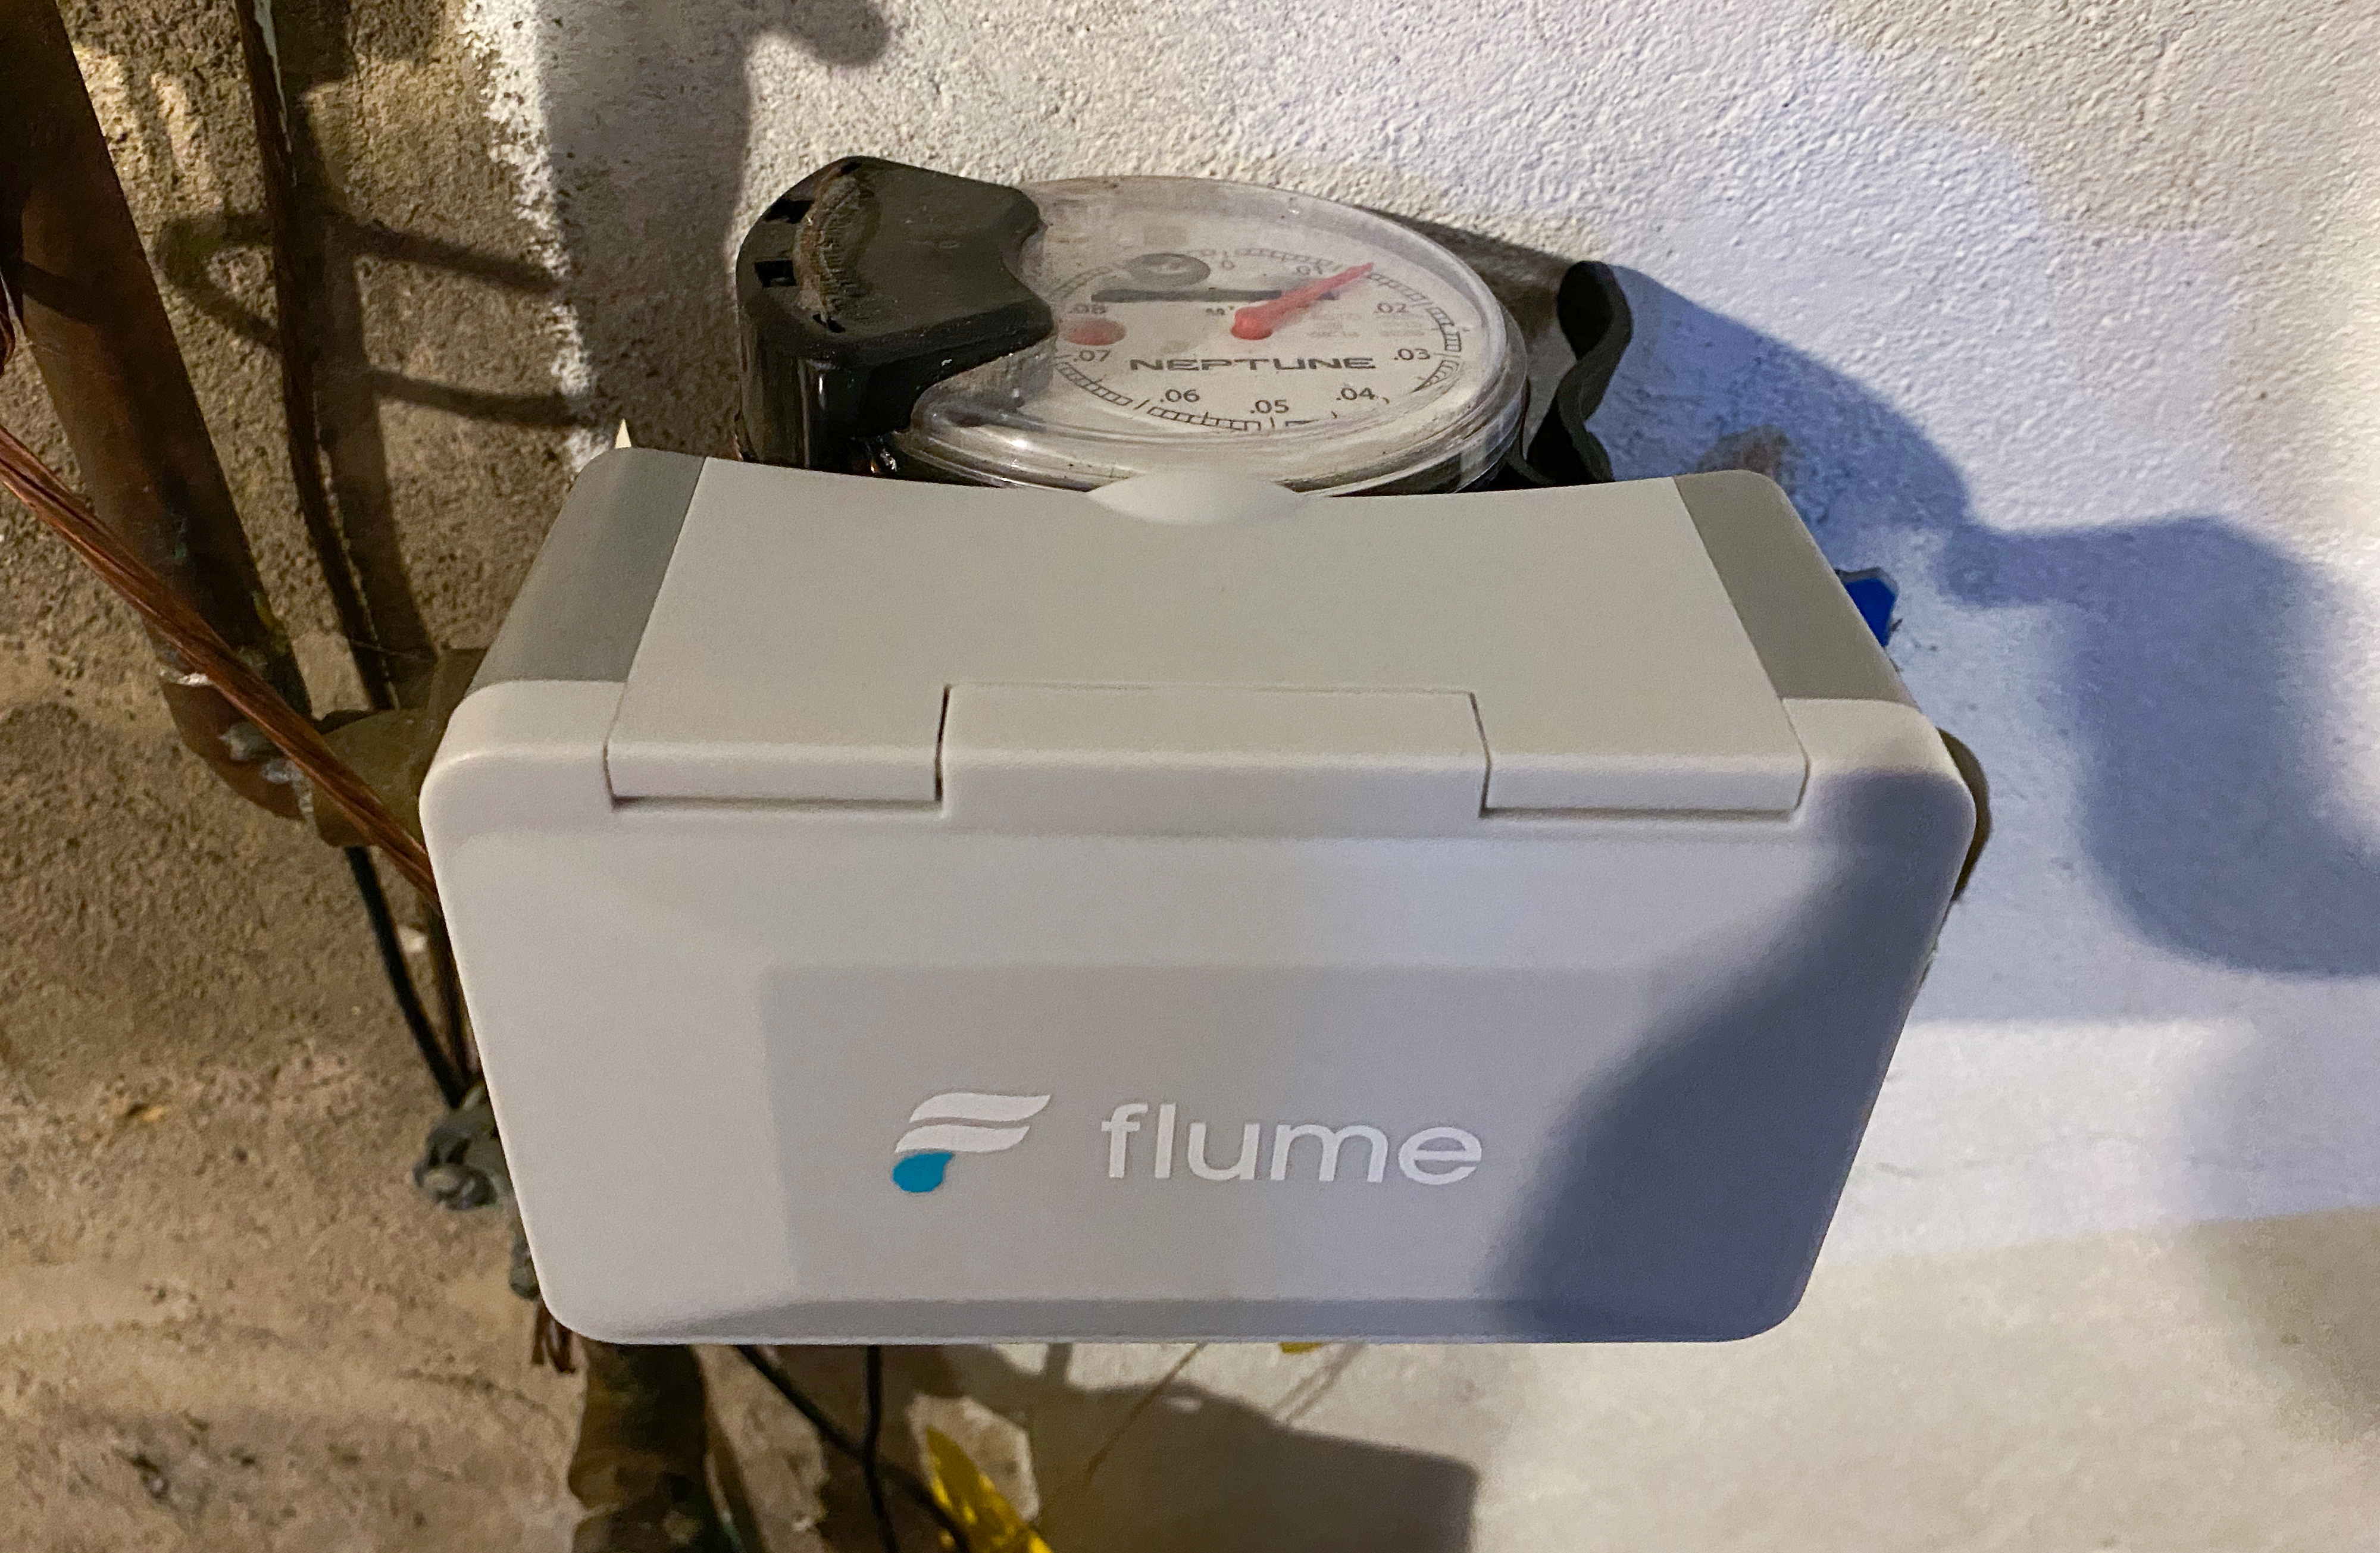 flume water meter